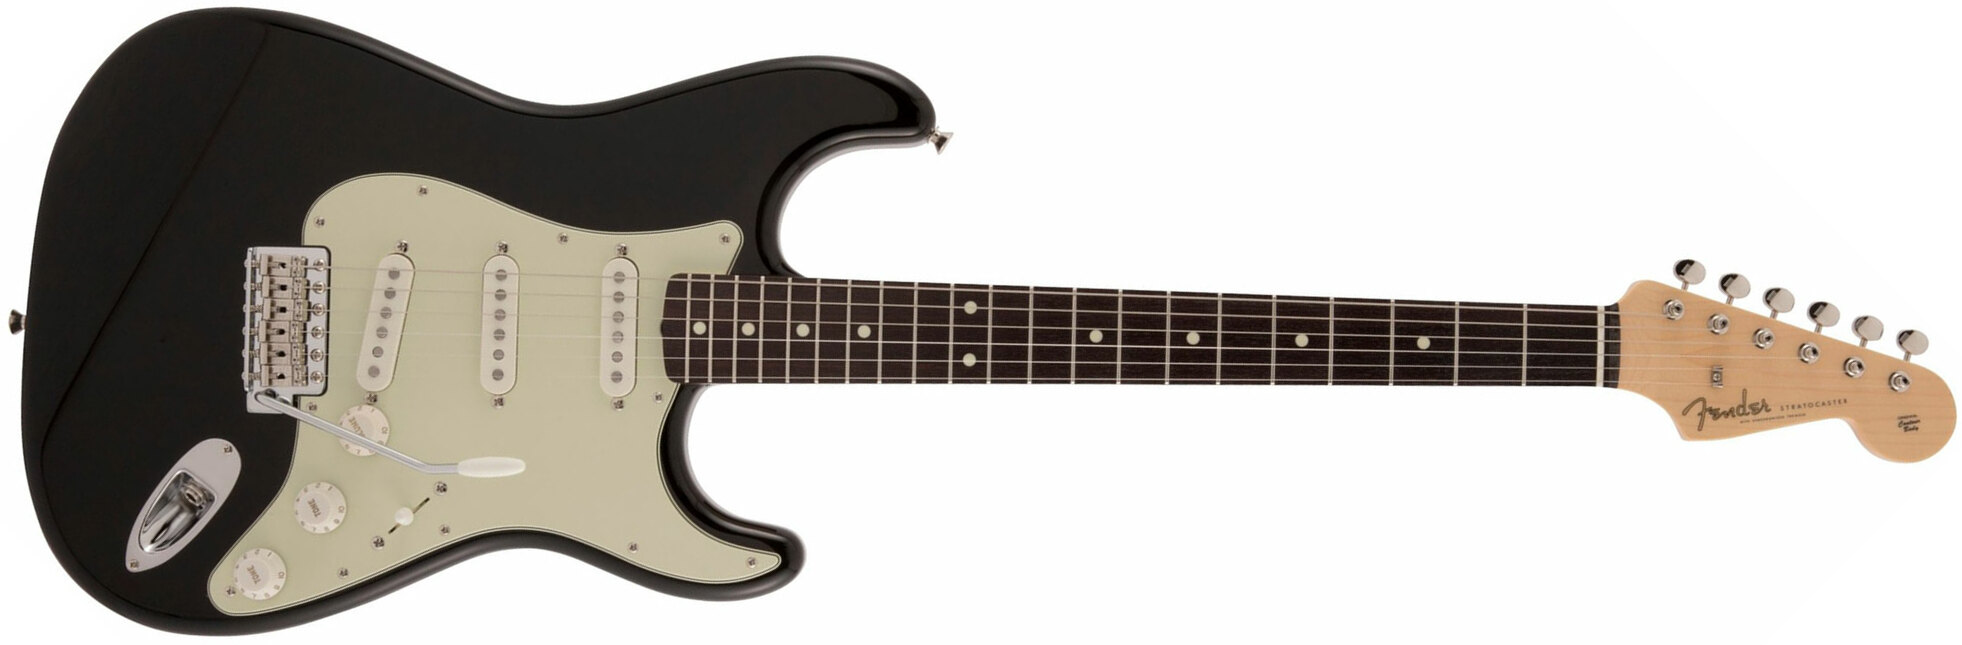 Fender Strat Traditional Ii 60s Mij Jap 3s Trem Rw - Black - Str shape electric guitar - Main picture